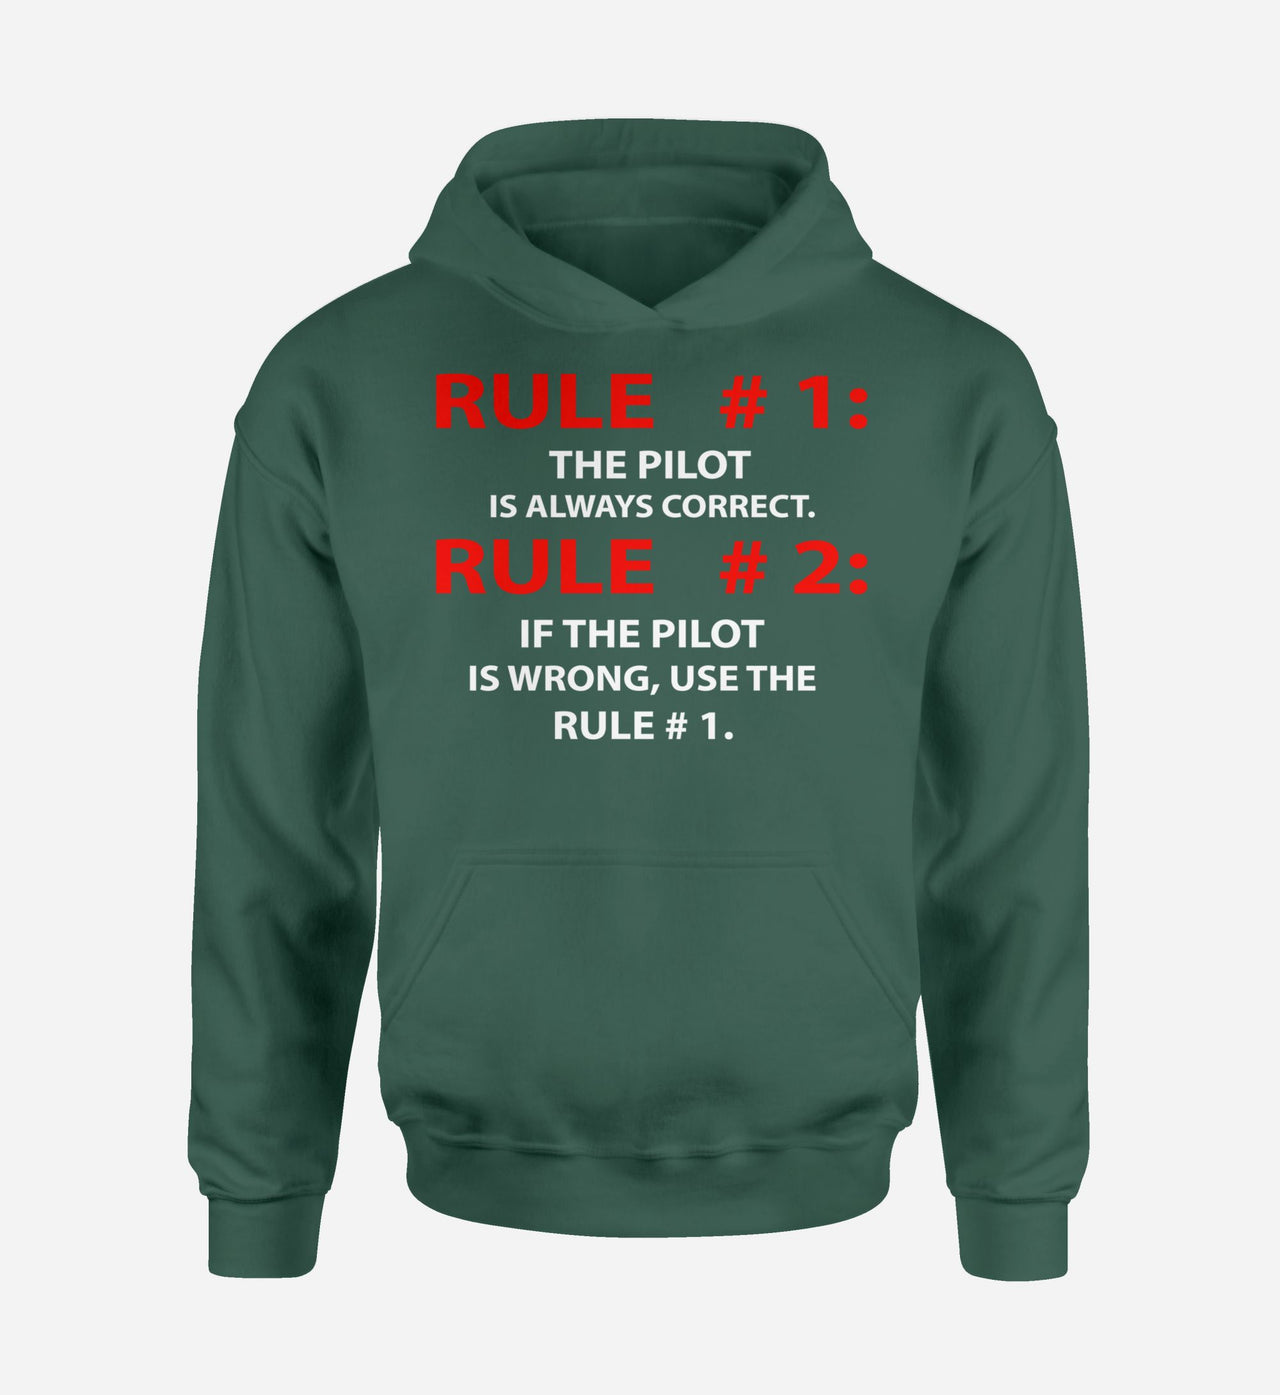 Rule 1 - Pilot is Always Correct Designed Hoodies